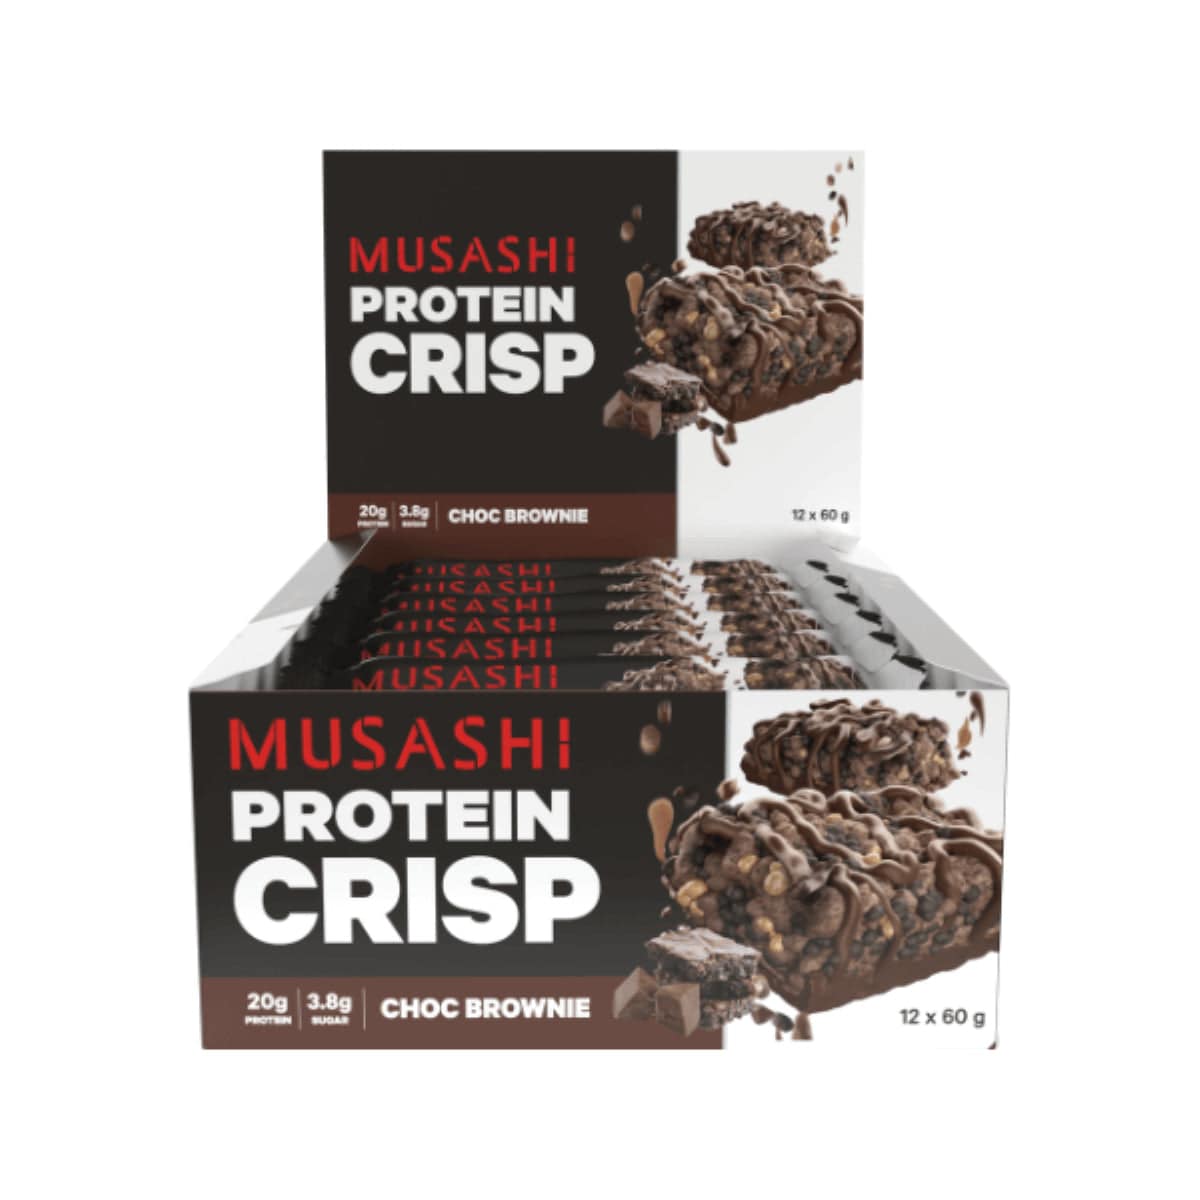 Musashi Protein Crisp Bar Choc Brownie 12 x 60g